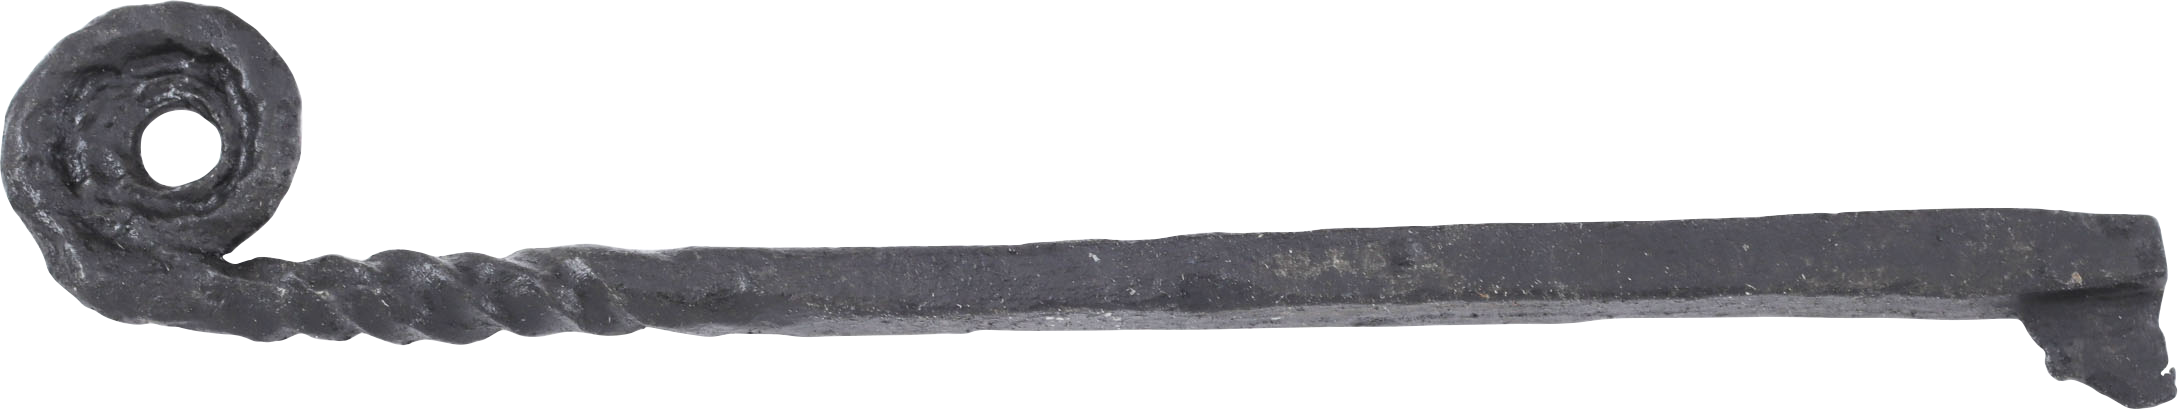 FINE VIKING SLAVE SHACKLE KEY C.900 AD